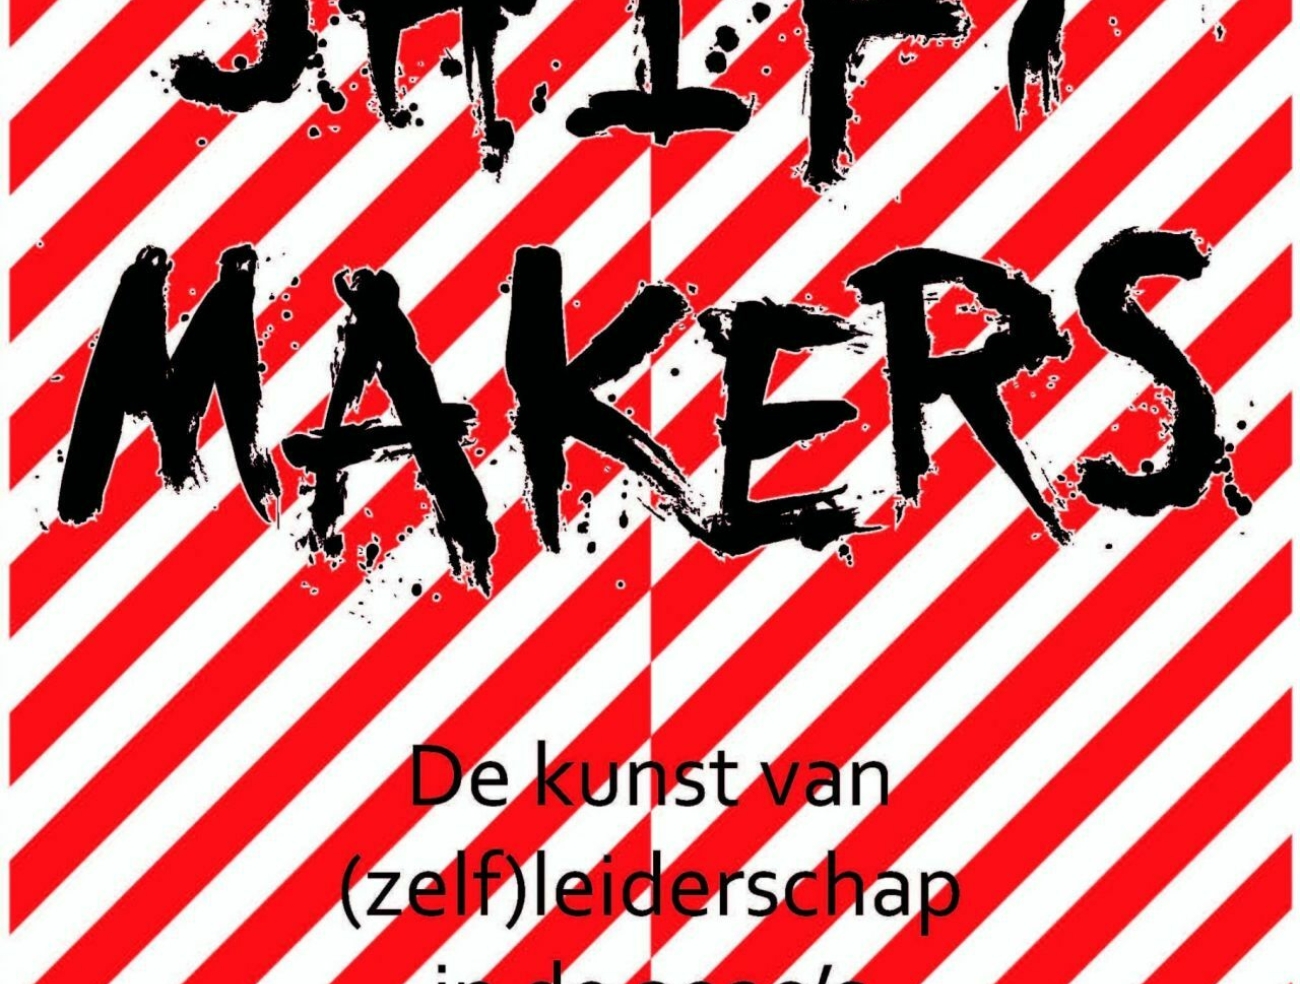 Book review: Shift Makers by Bart Van der Herten